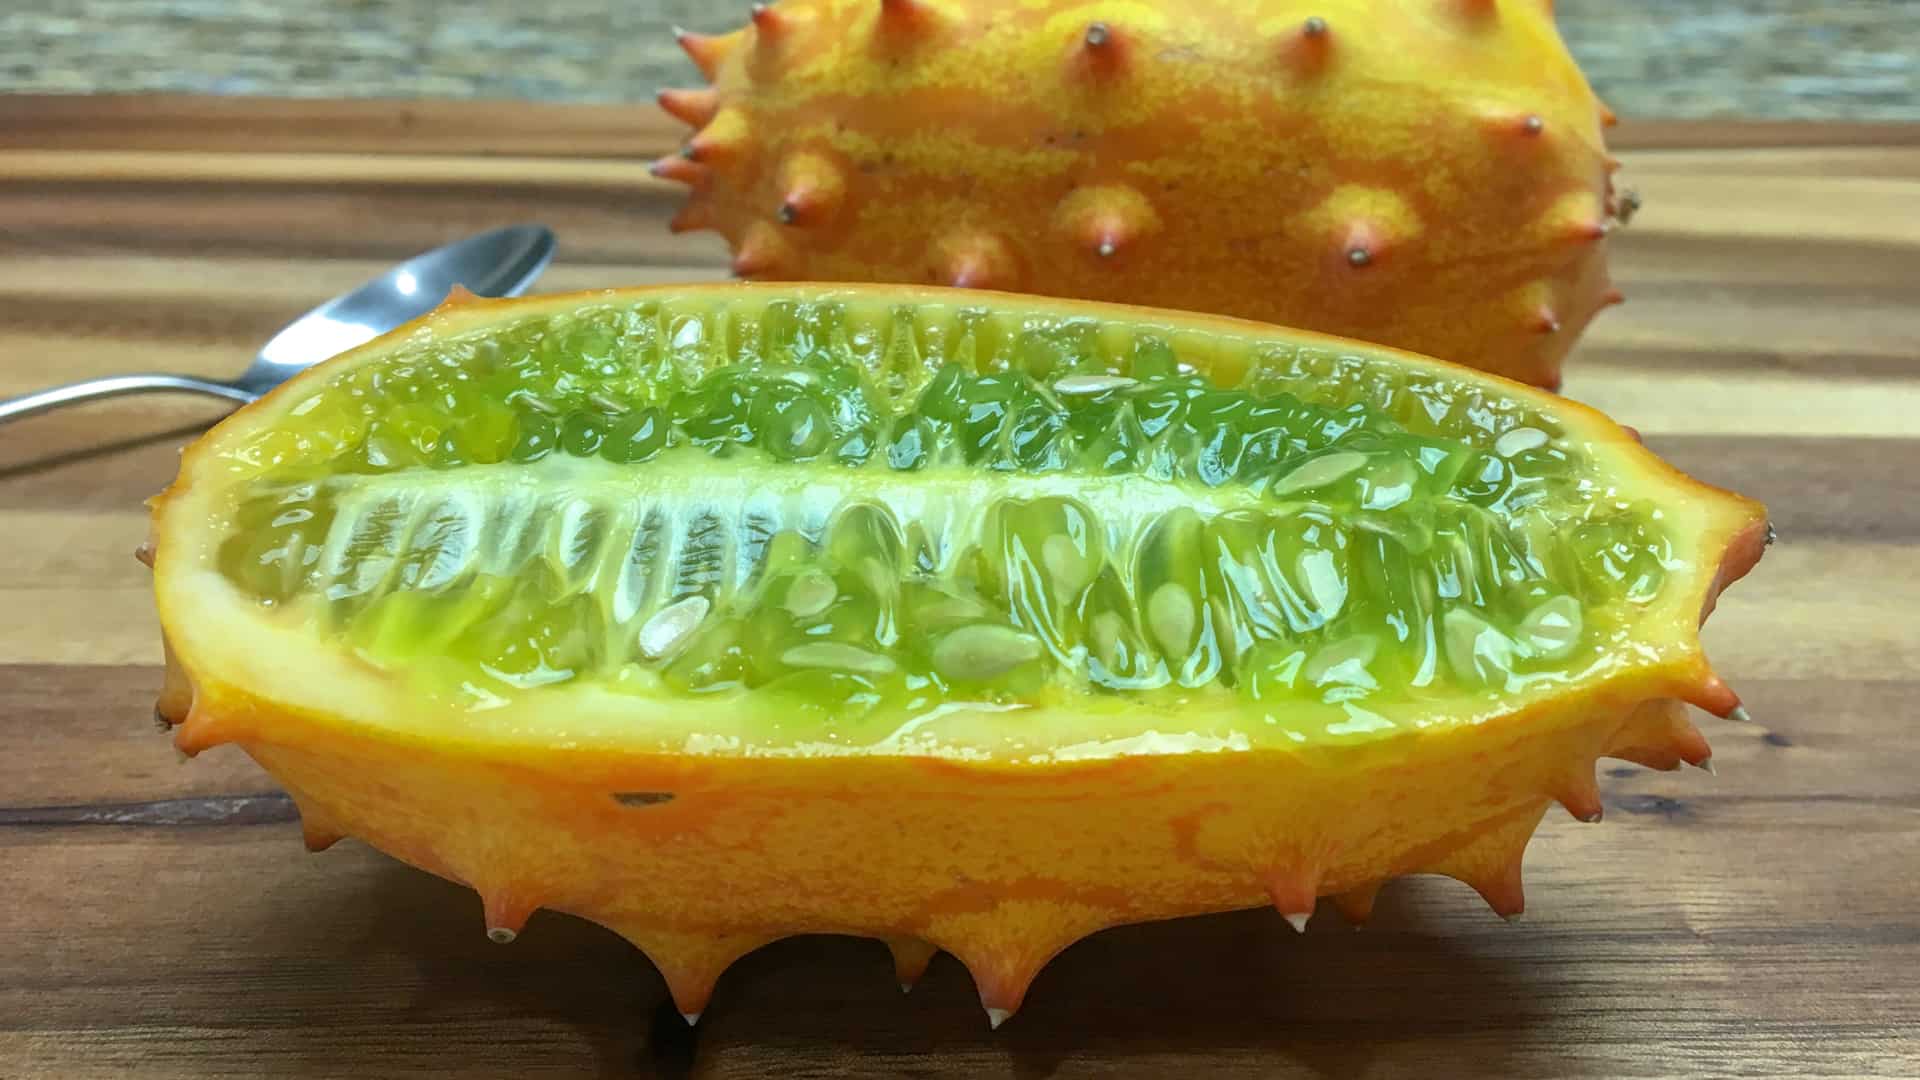 Horned jelly melon 10 Harvest 2018 seeds Organic Florida Grown Kiwano melon